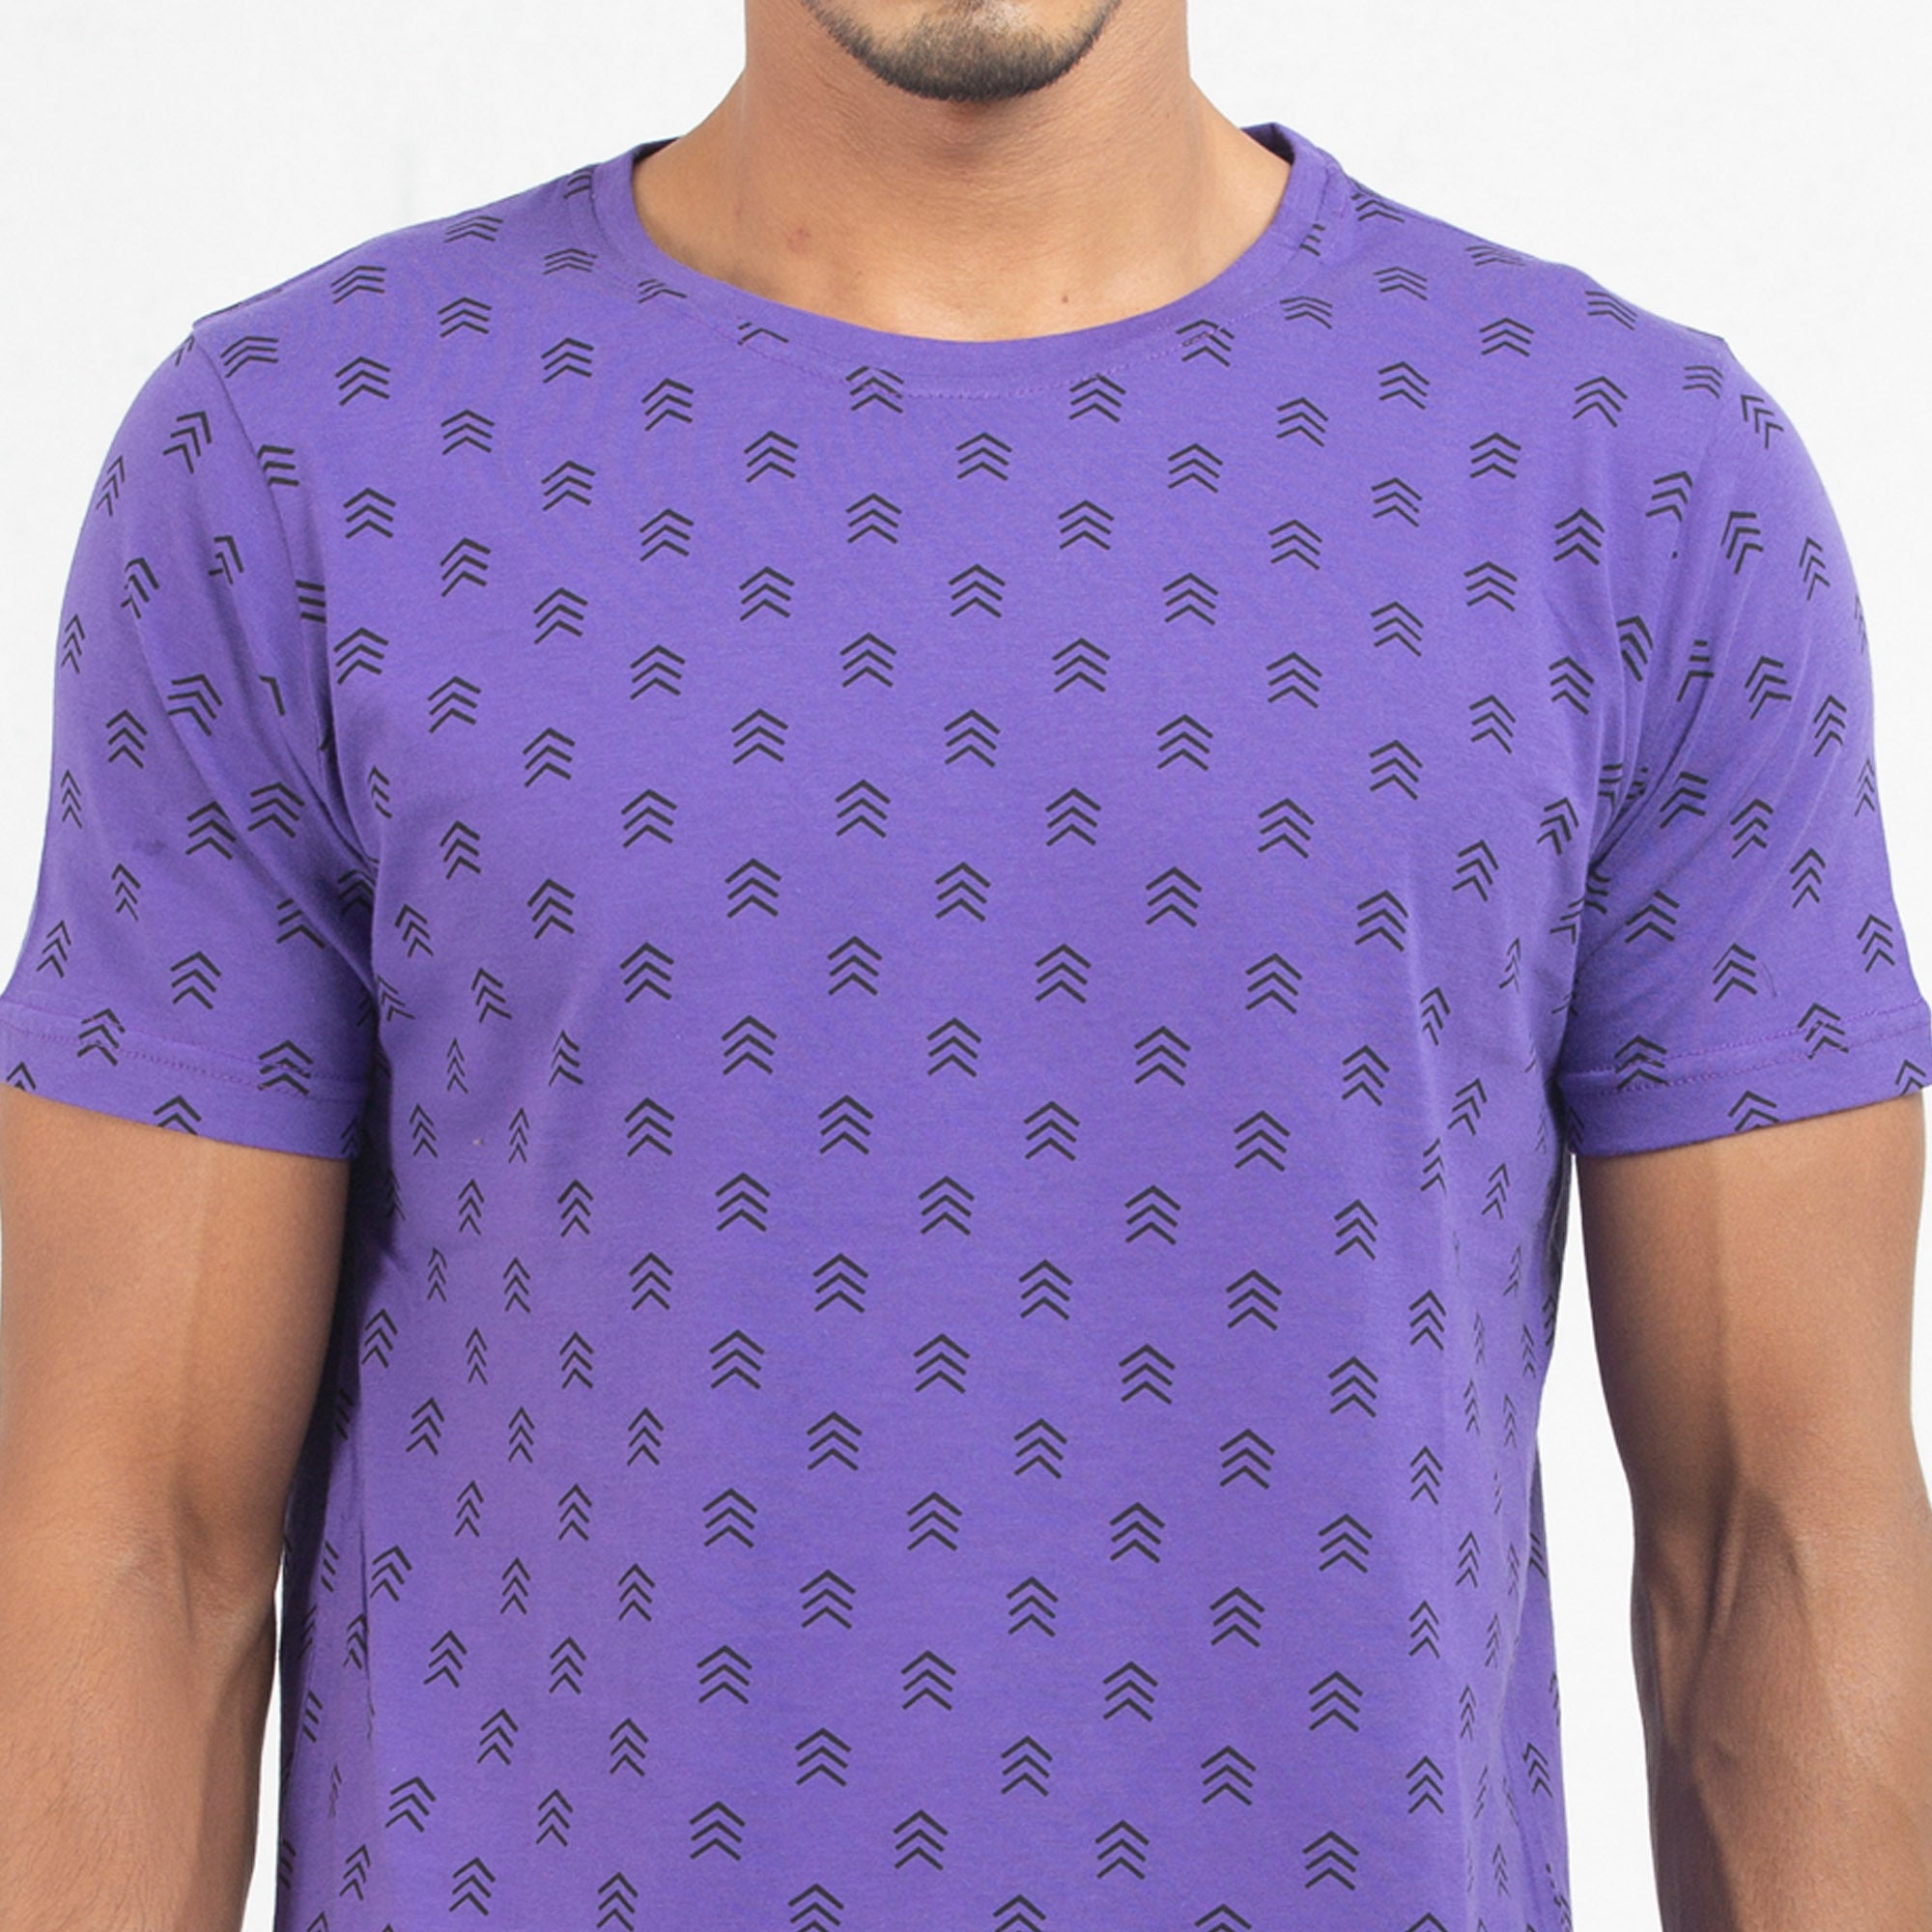 Printed T-shirt daily- purple